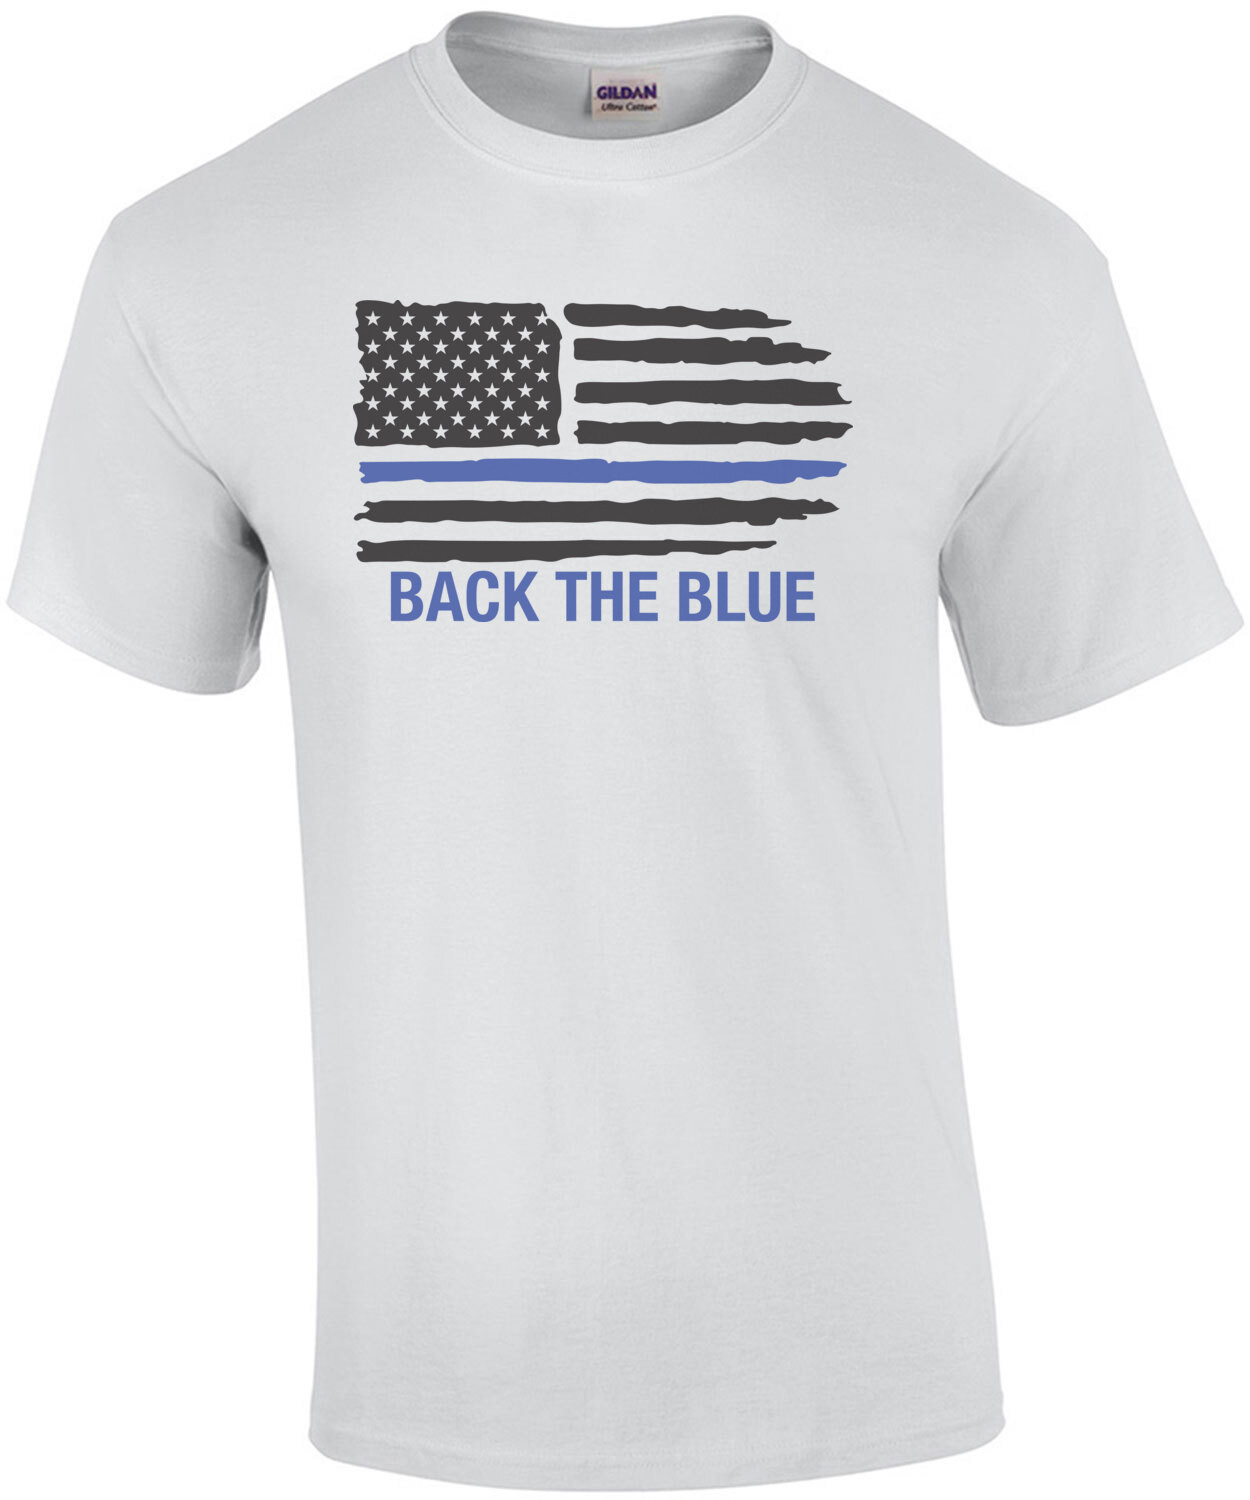 Back The Blue Shirt